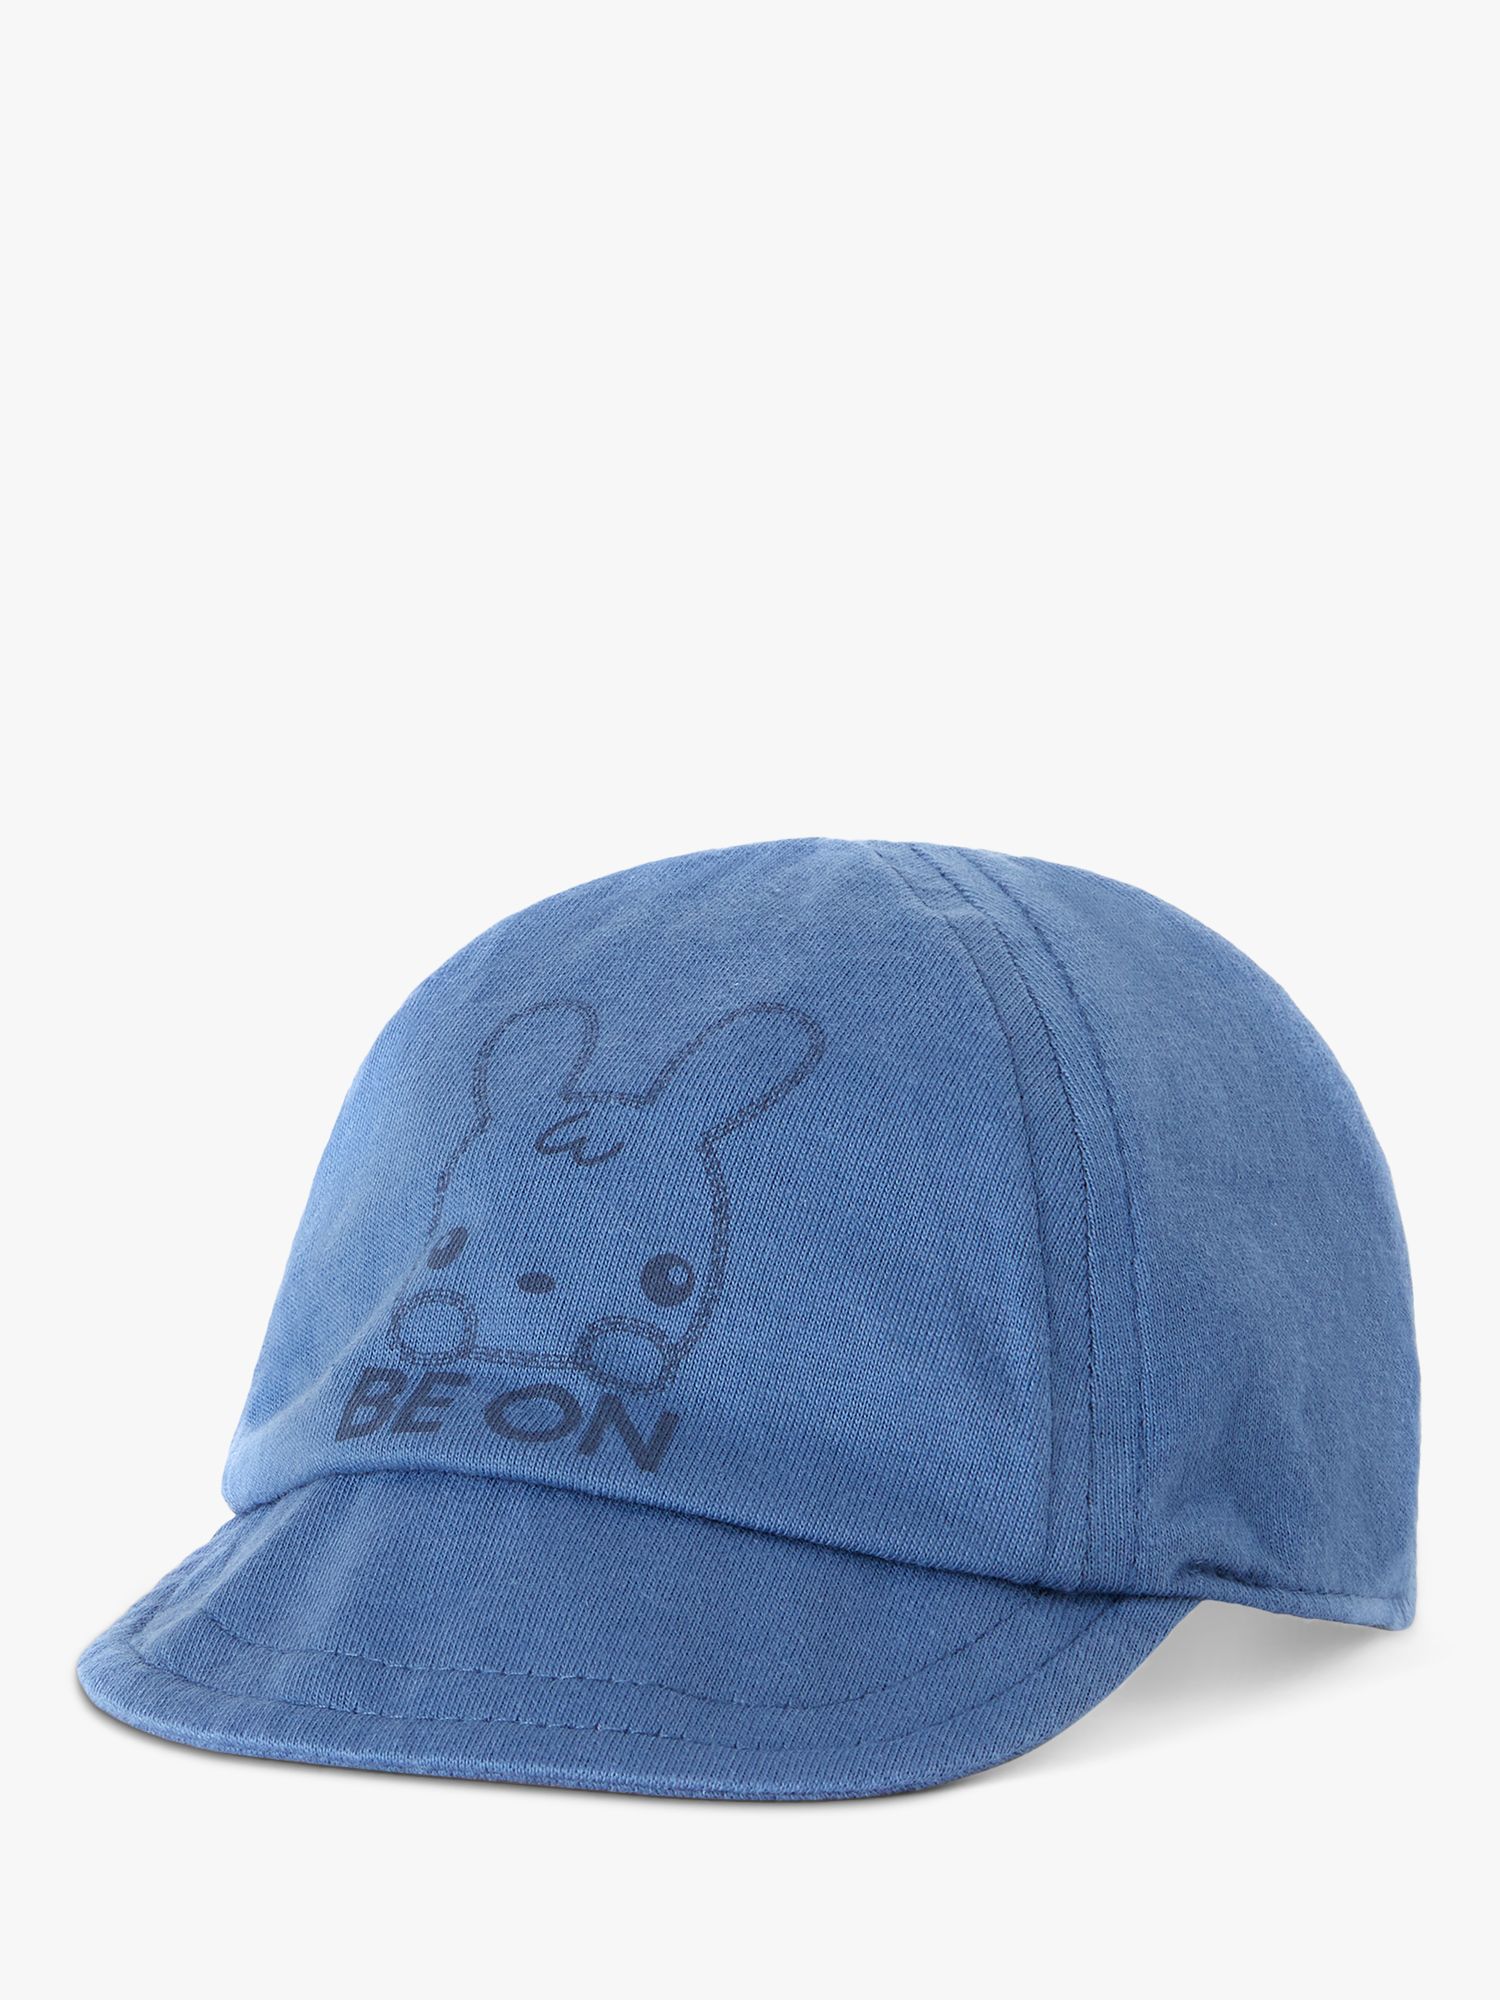 Benetton Baby Bunny Baseball Cap, Bluette, 1-3 months